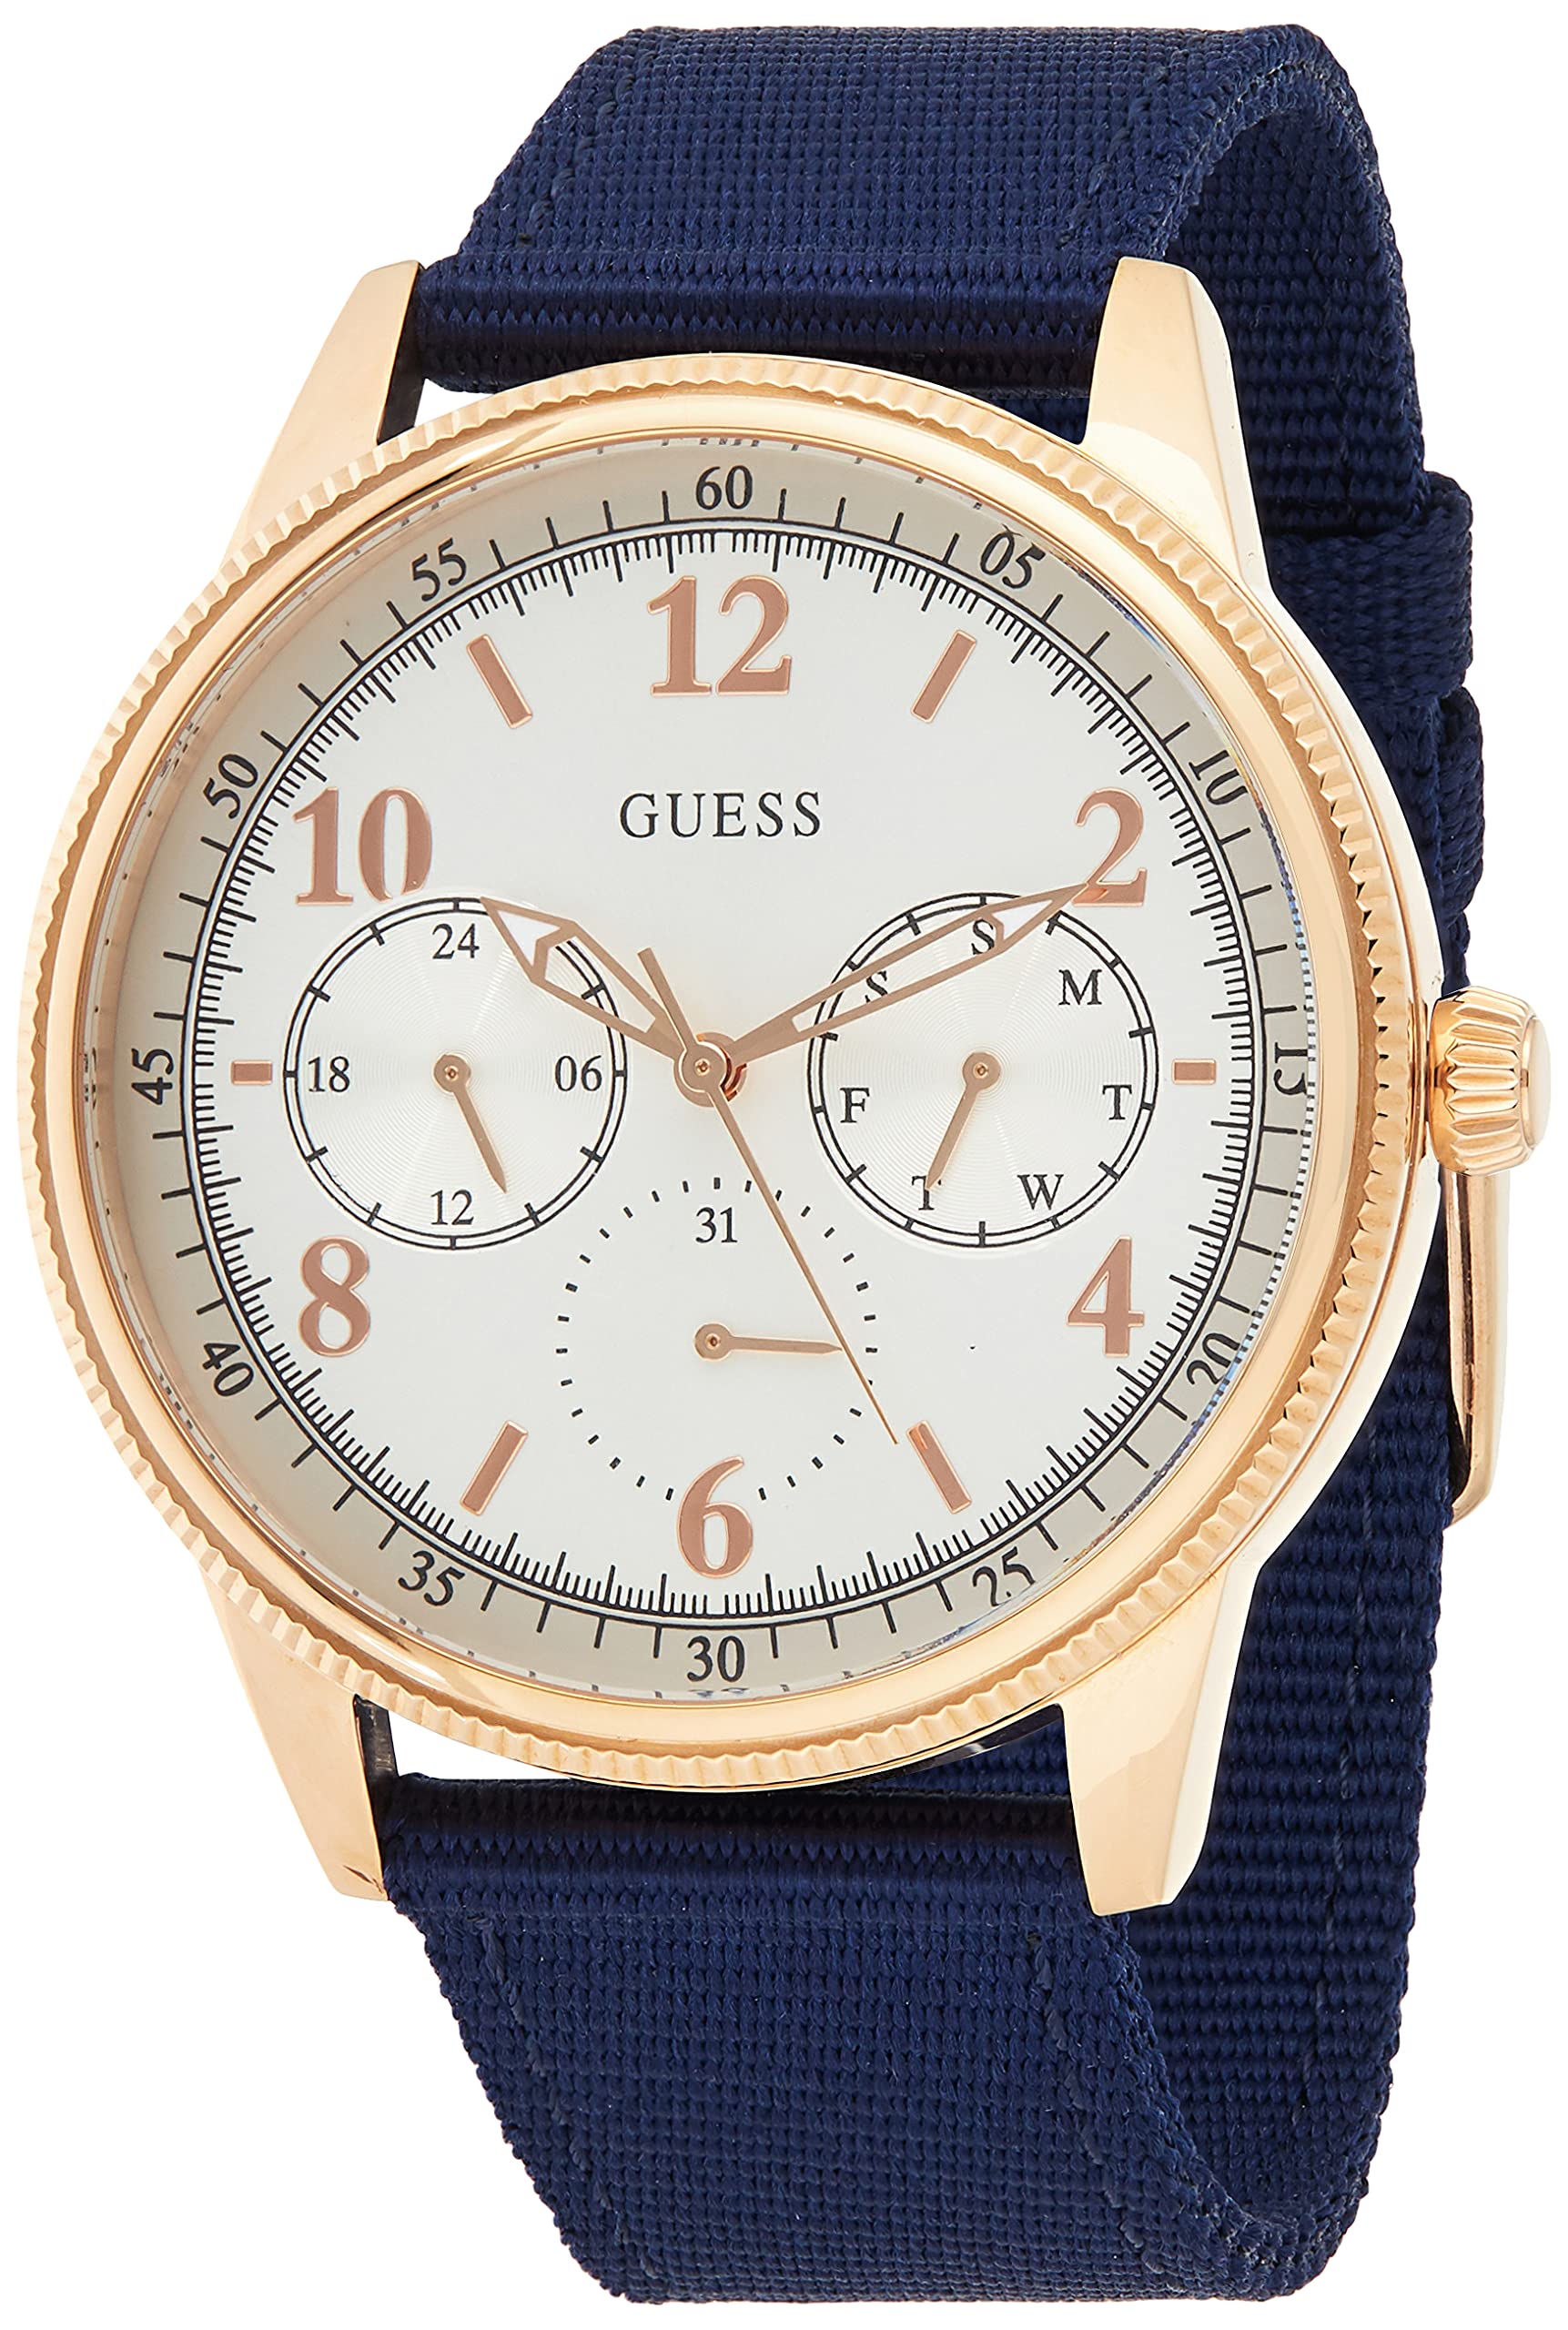 Guess Watches Guess Men's -Rose Gold-Beige Watch Blue